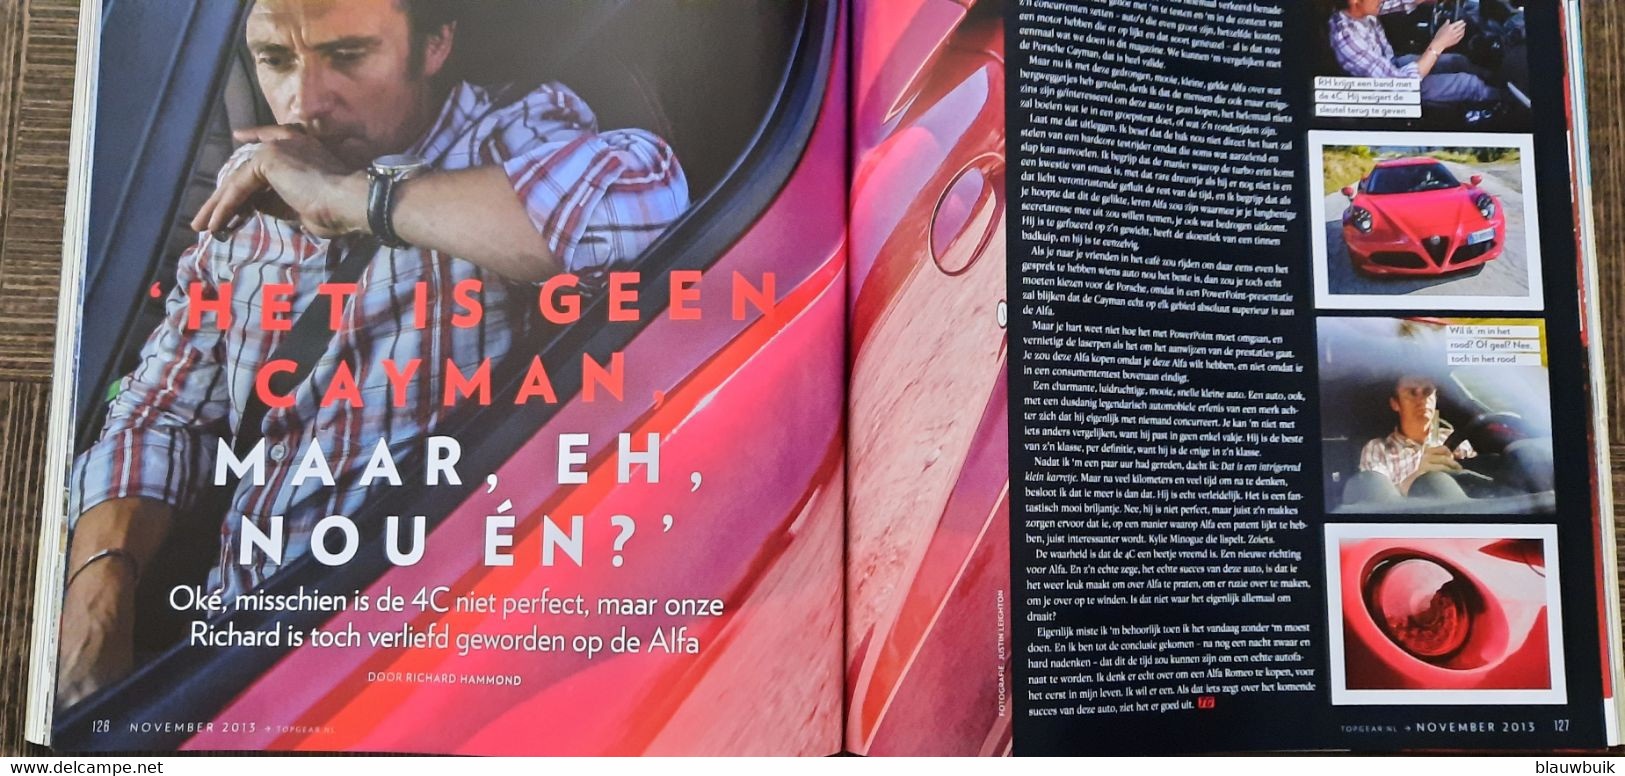 Top Gear Magazine N°101 - 2013 Alfa 4C